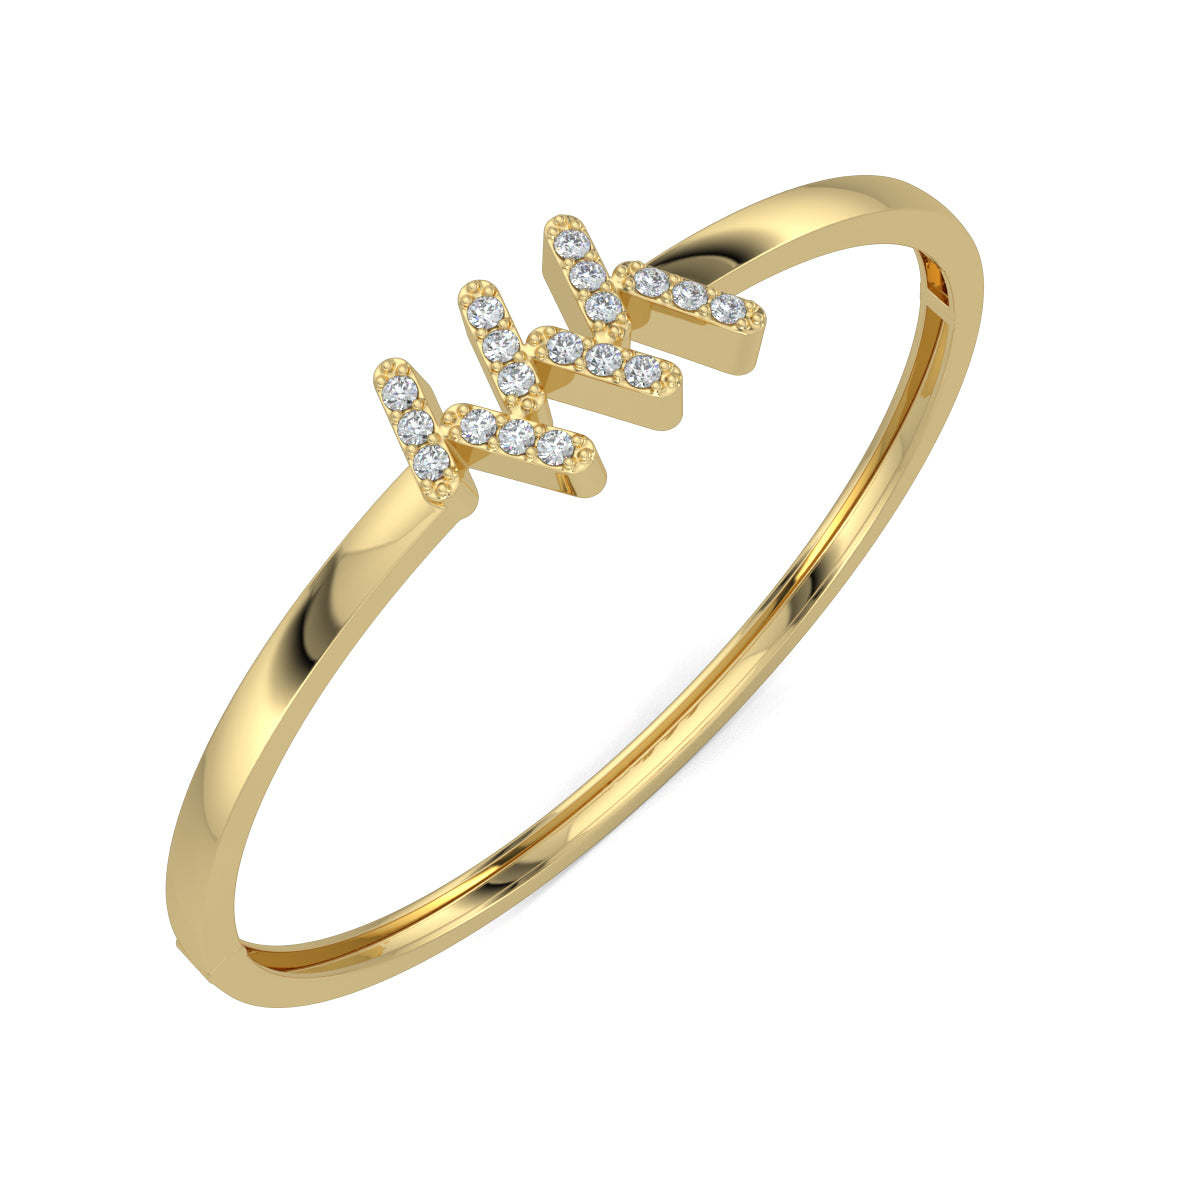 Yellow Gold, Diamond Bracelet, Natural diamond bracelet, Lab-grown diamond bracelet, Ripple Diamond Bracelet, Oval Band Bracelet, Ripple Diamond Pattern, Fashion Jewelry